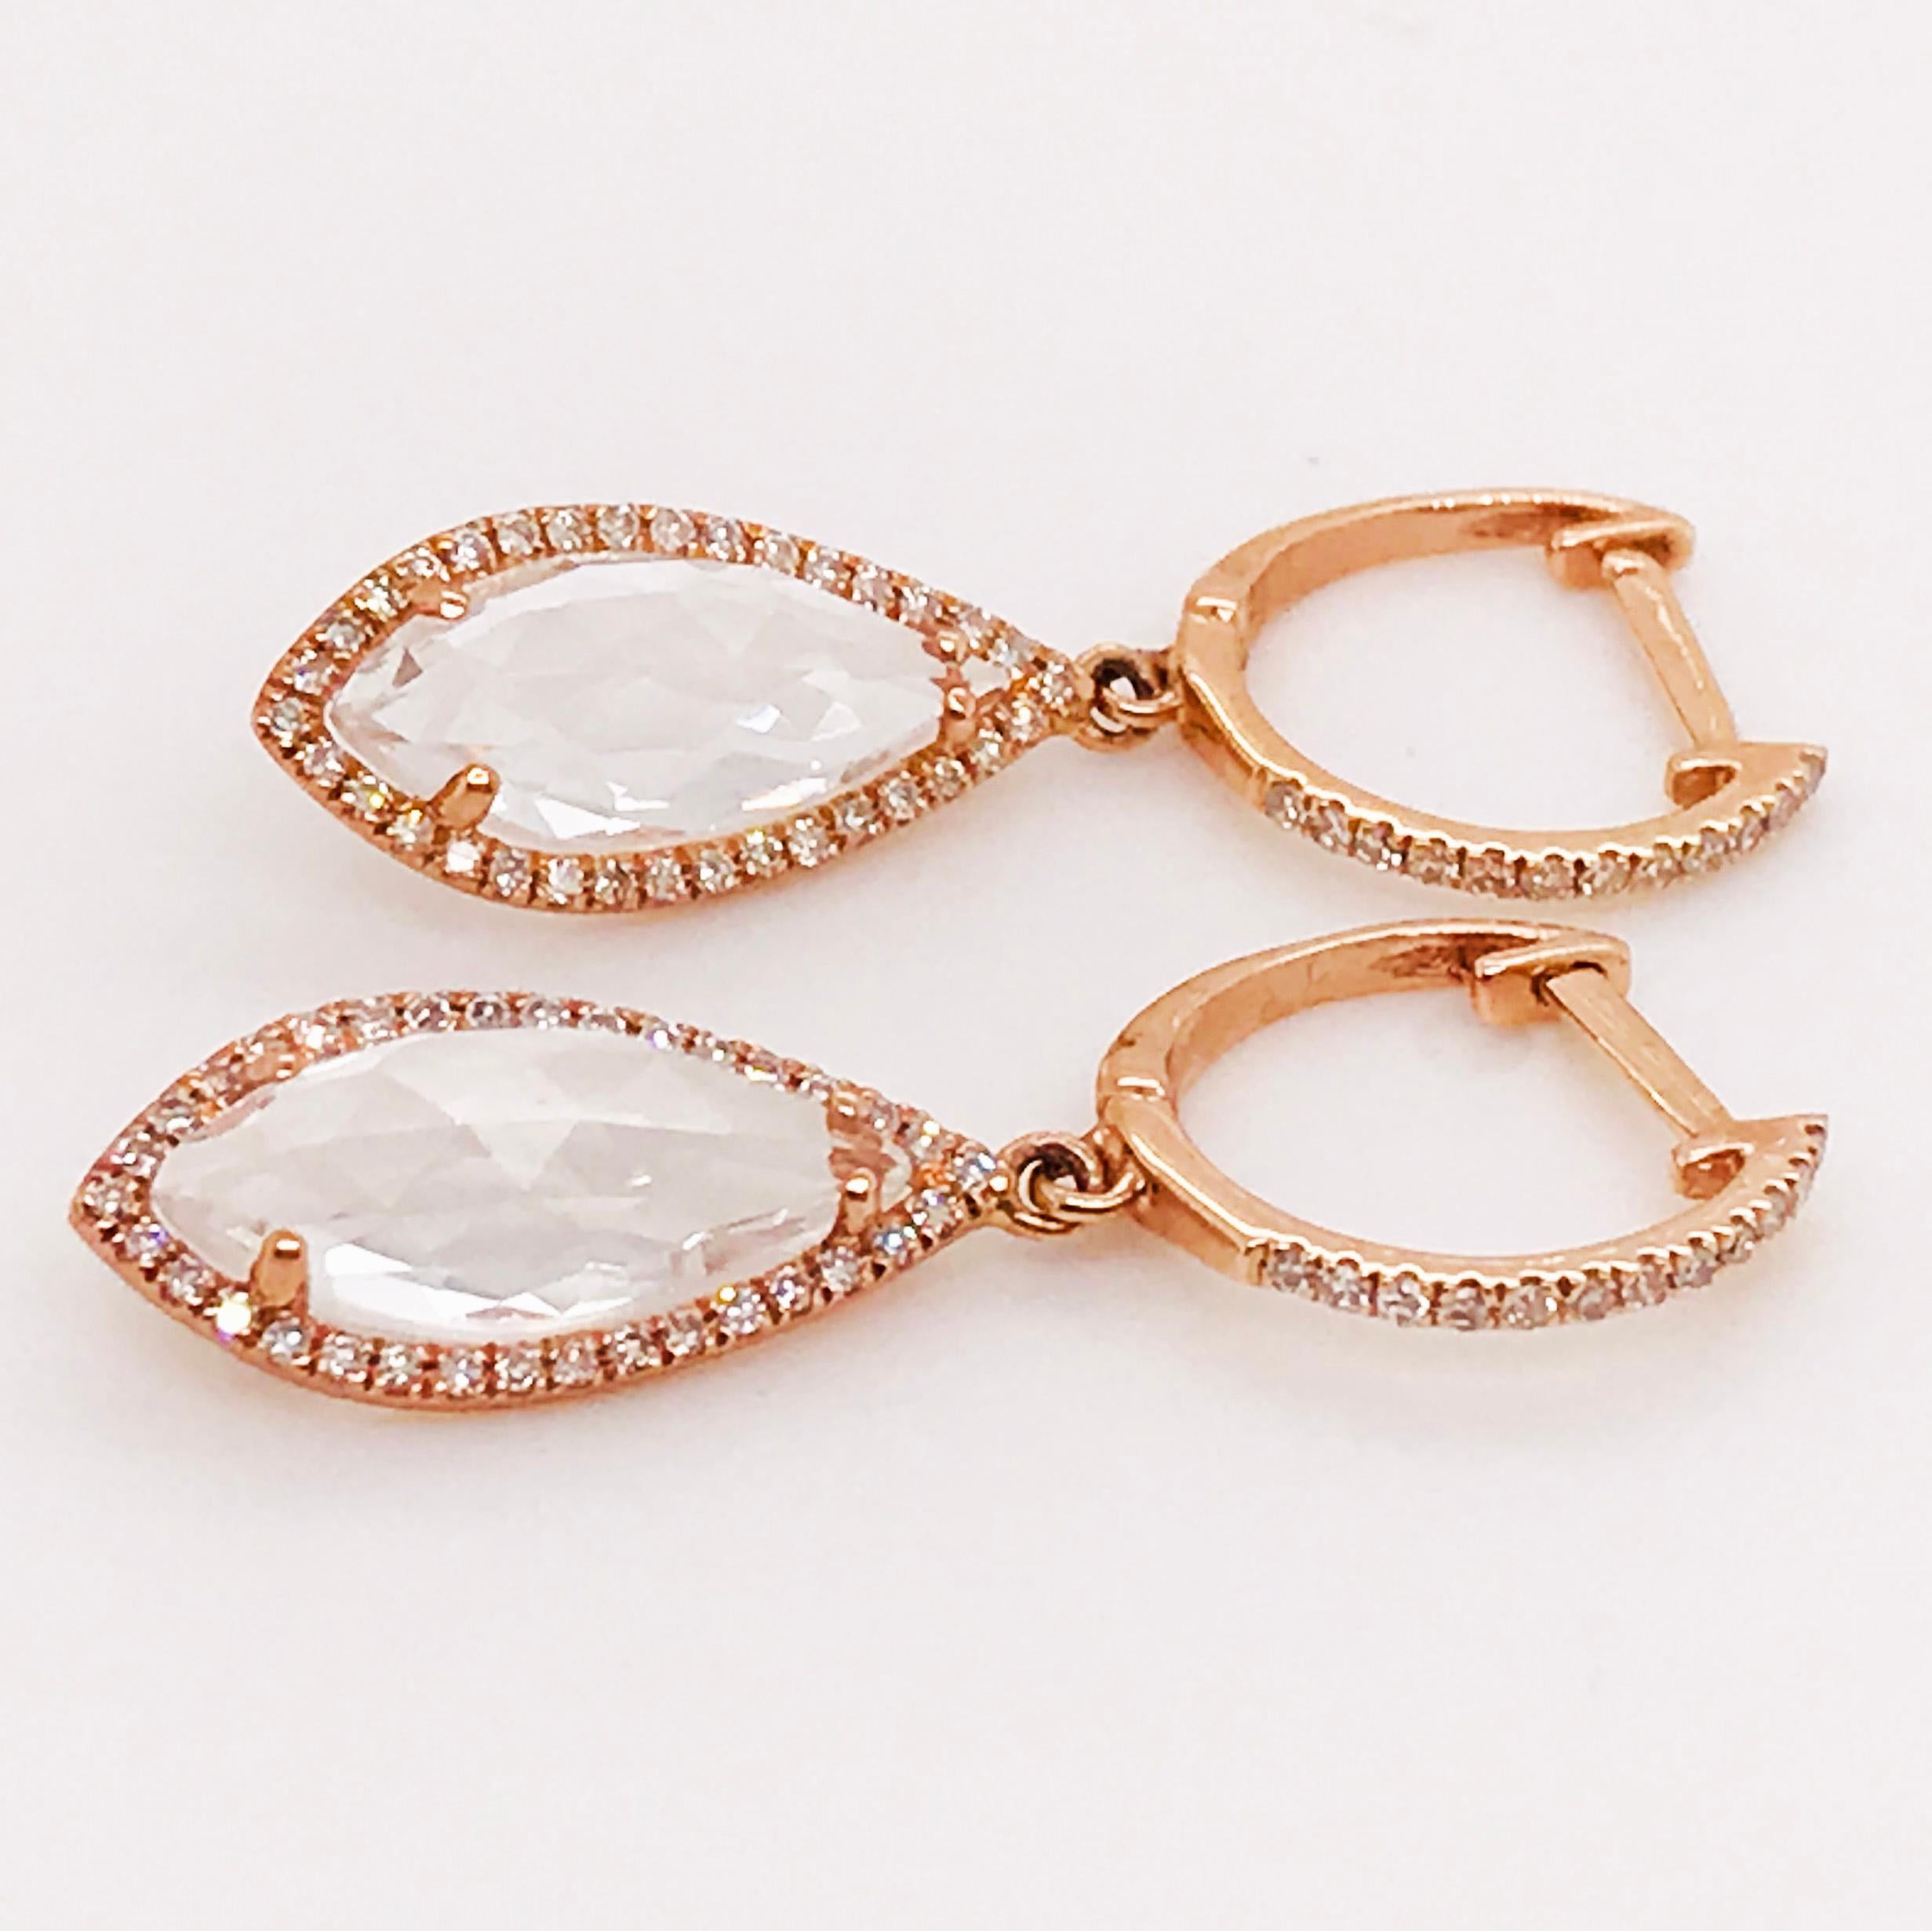 Women's 2.75 Carat White Topaz and 0.25 Carat Diamond Earring Dangles in 14 Karat Gold For Sale